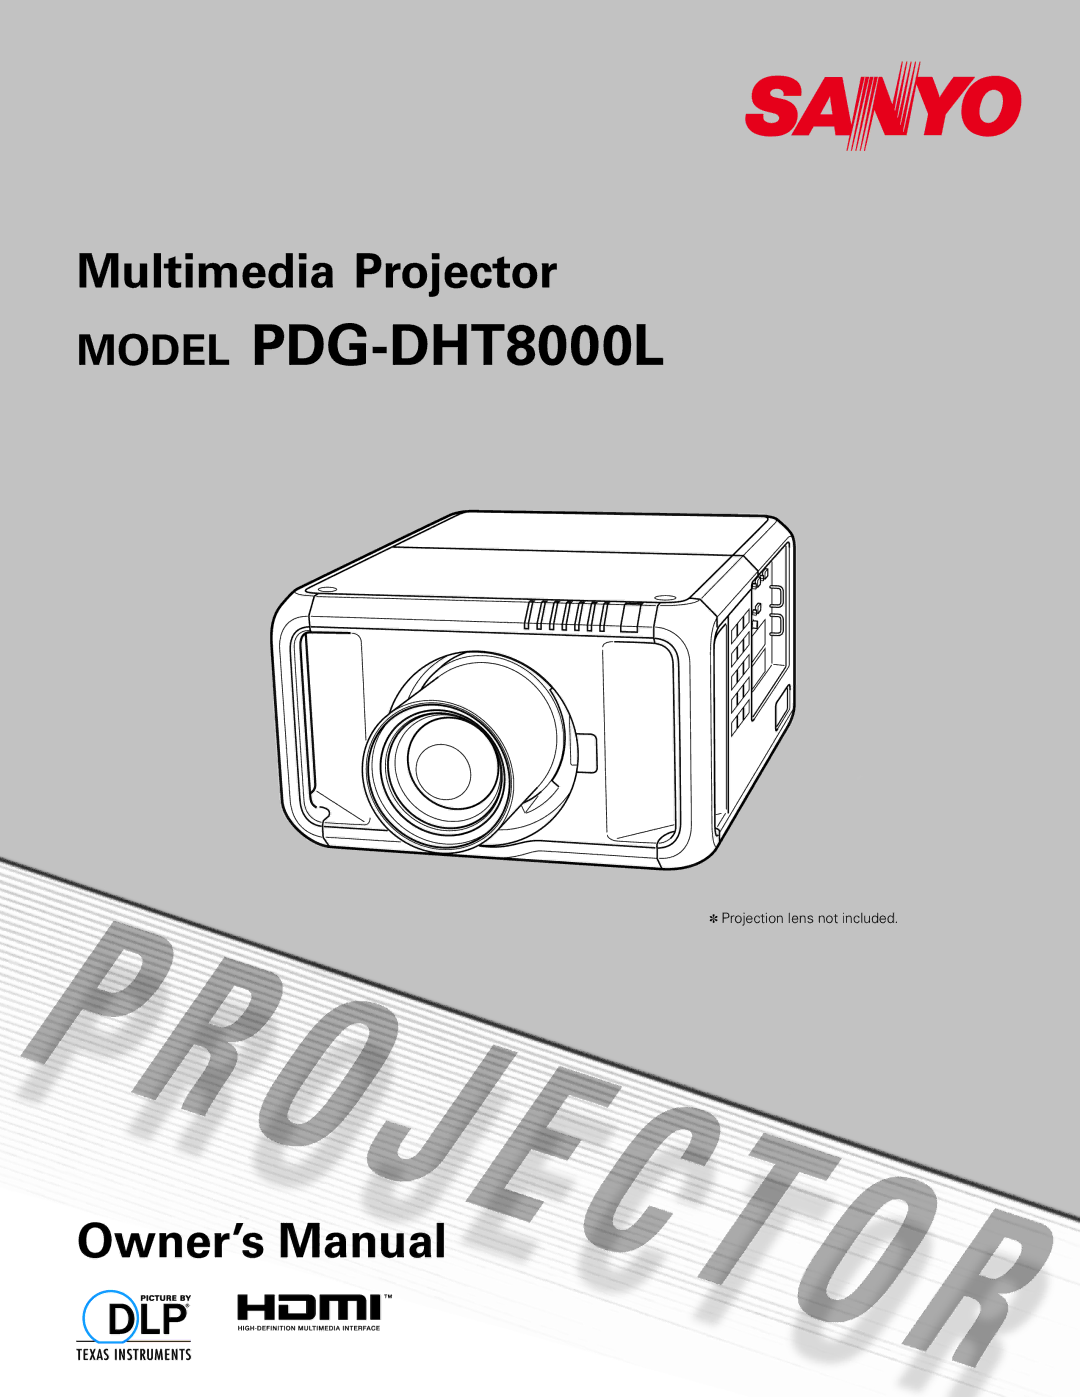 Sanyo owner manual Model PDG-DHT8000L 